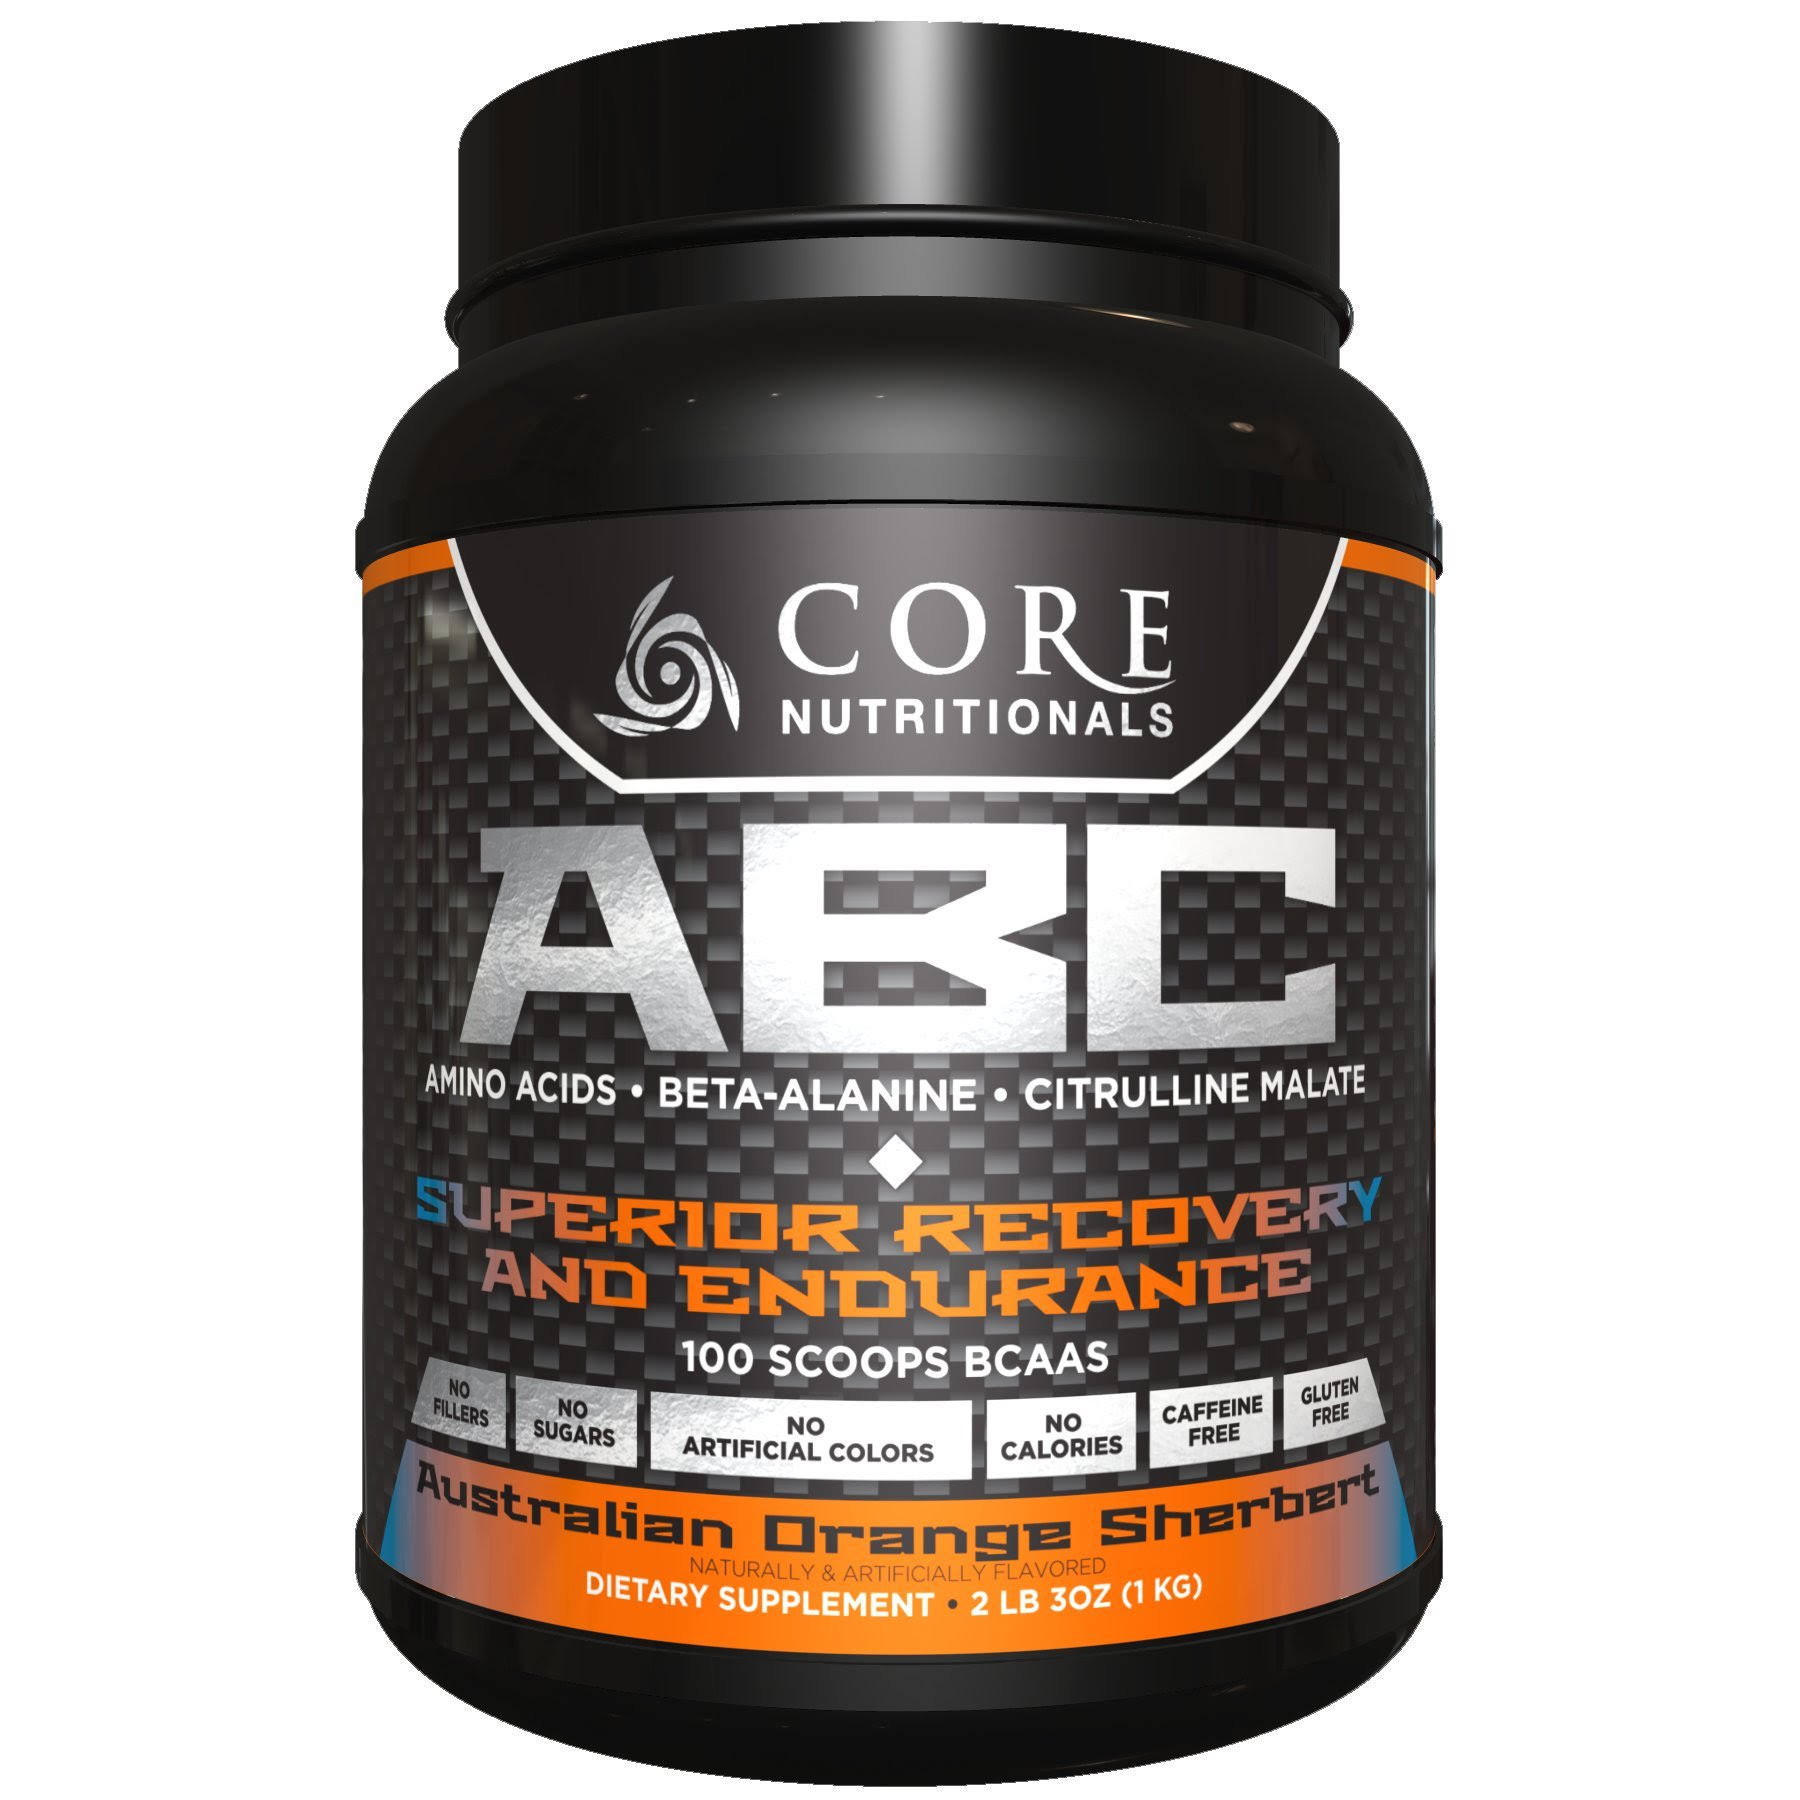 Core Nutritionals Core ABC - 100 Scoops - Australian Orange Sherbert